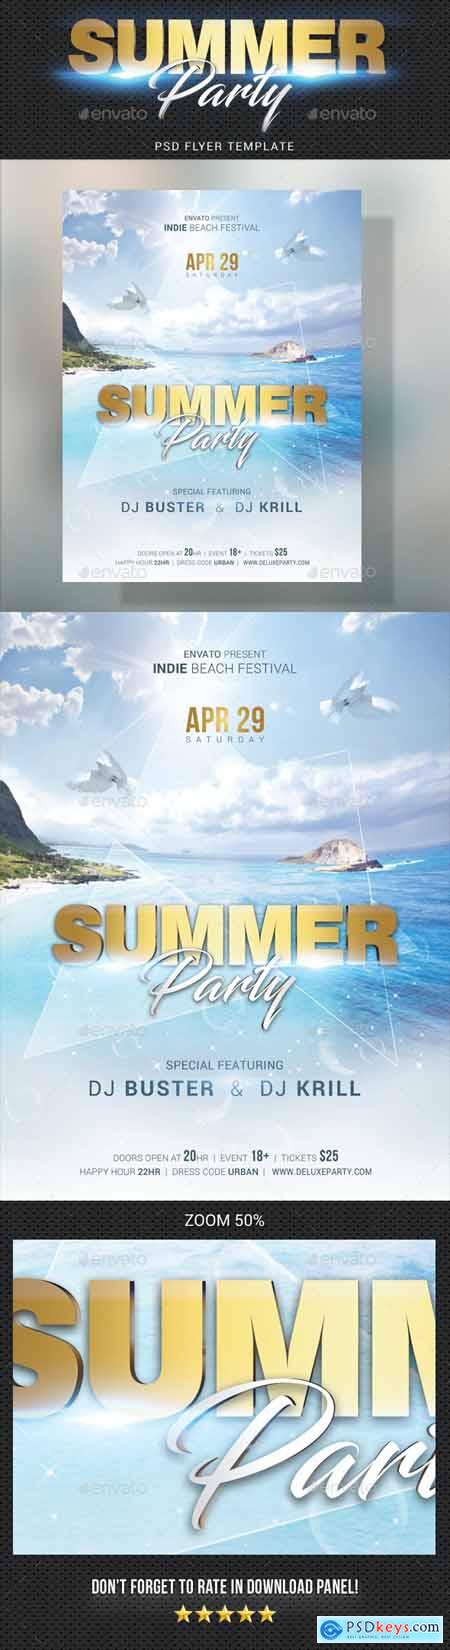 Summer Dj Party Flyer 20391365